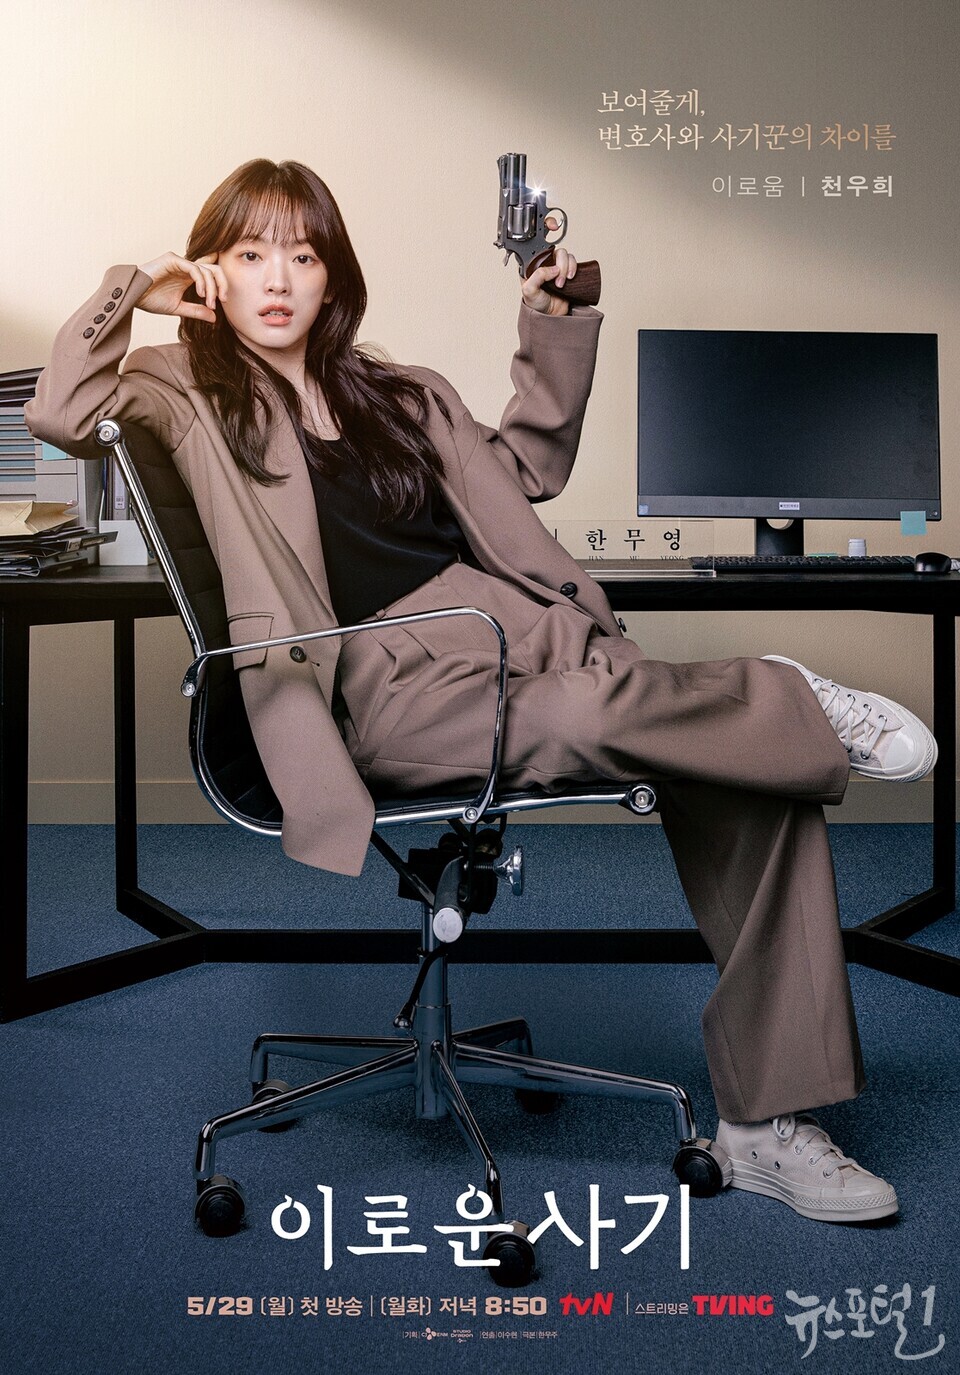 ▲ tvN 새 월화드라마 ‘이로운 사기’ 천우희, 캐릭터 포스터 / 사진제공=tvN